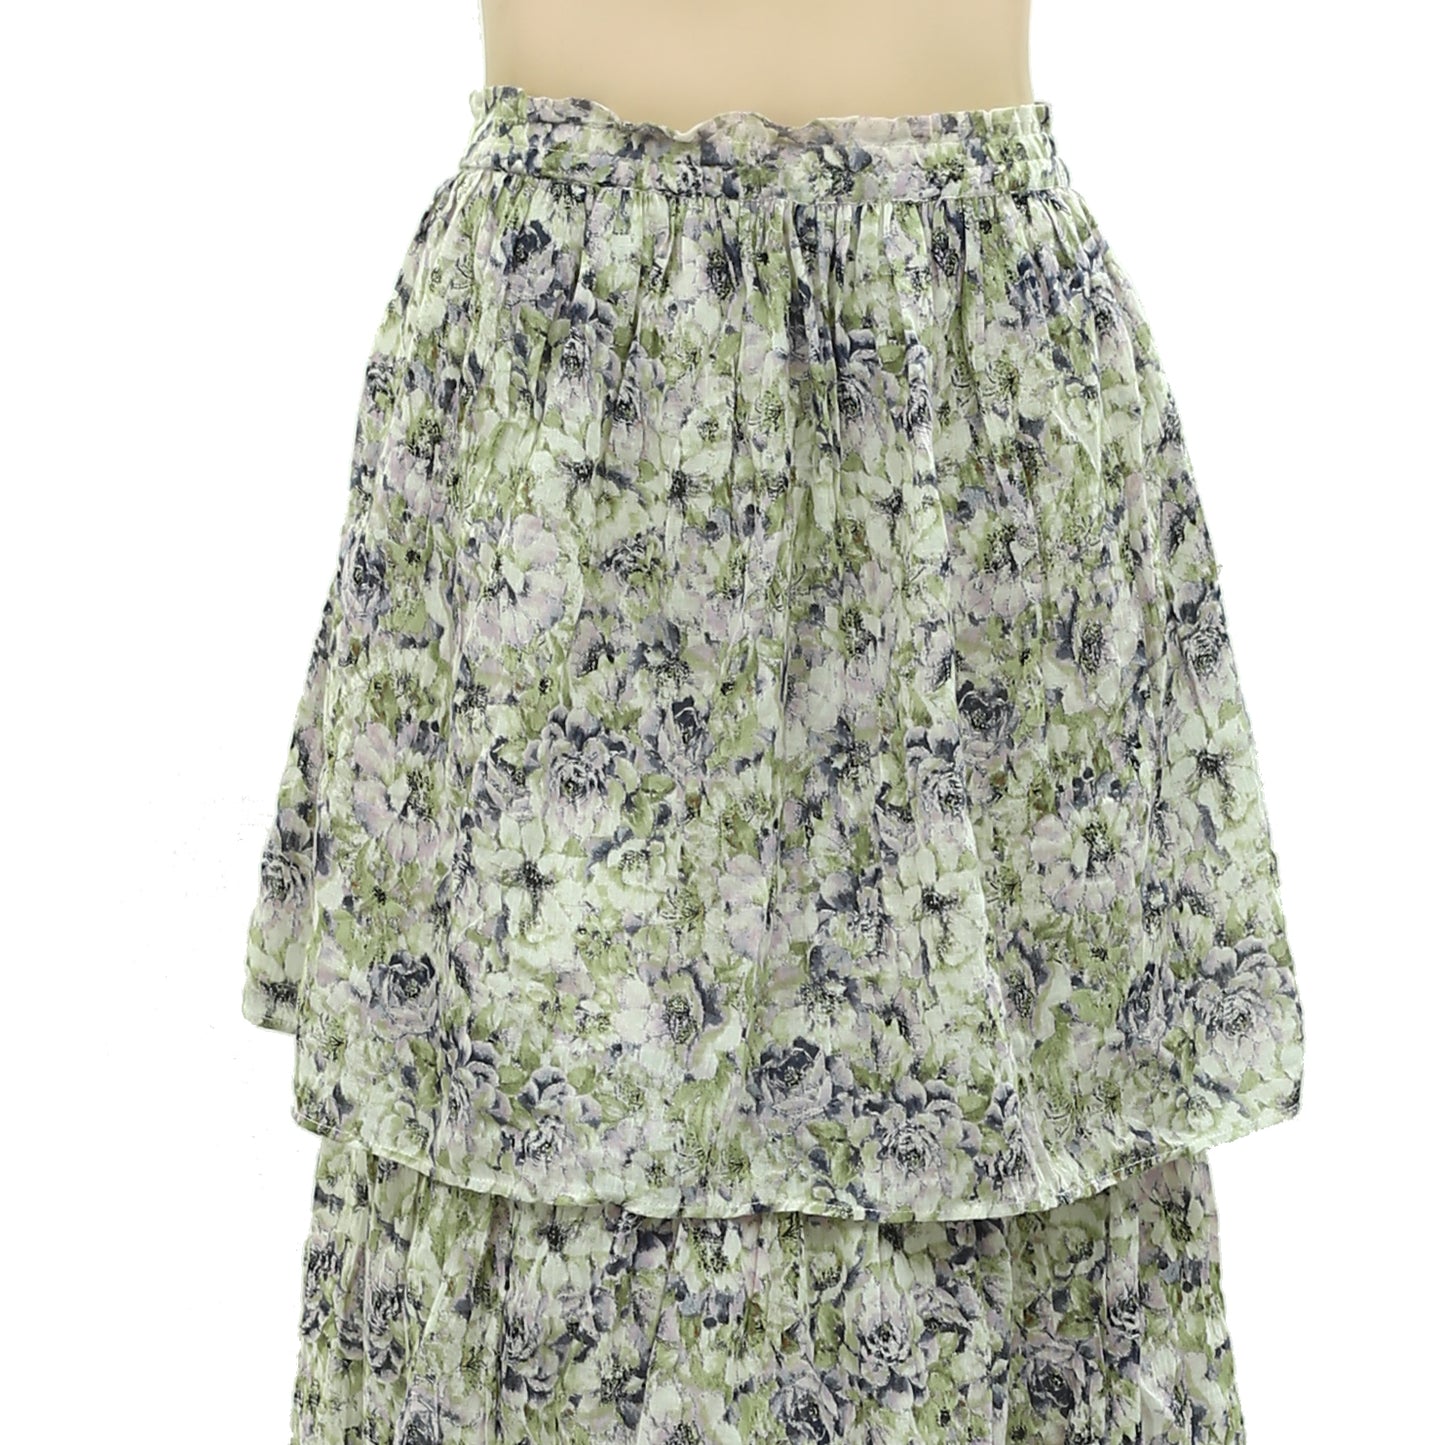 HappyxNature Kate Hudson Floral Printed Ruffle Maxi Skirt M